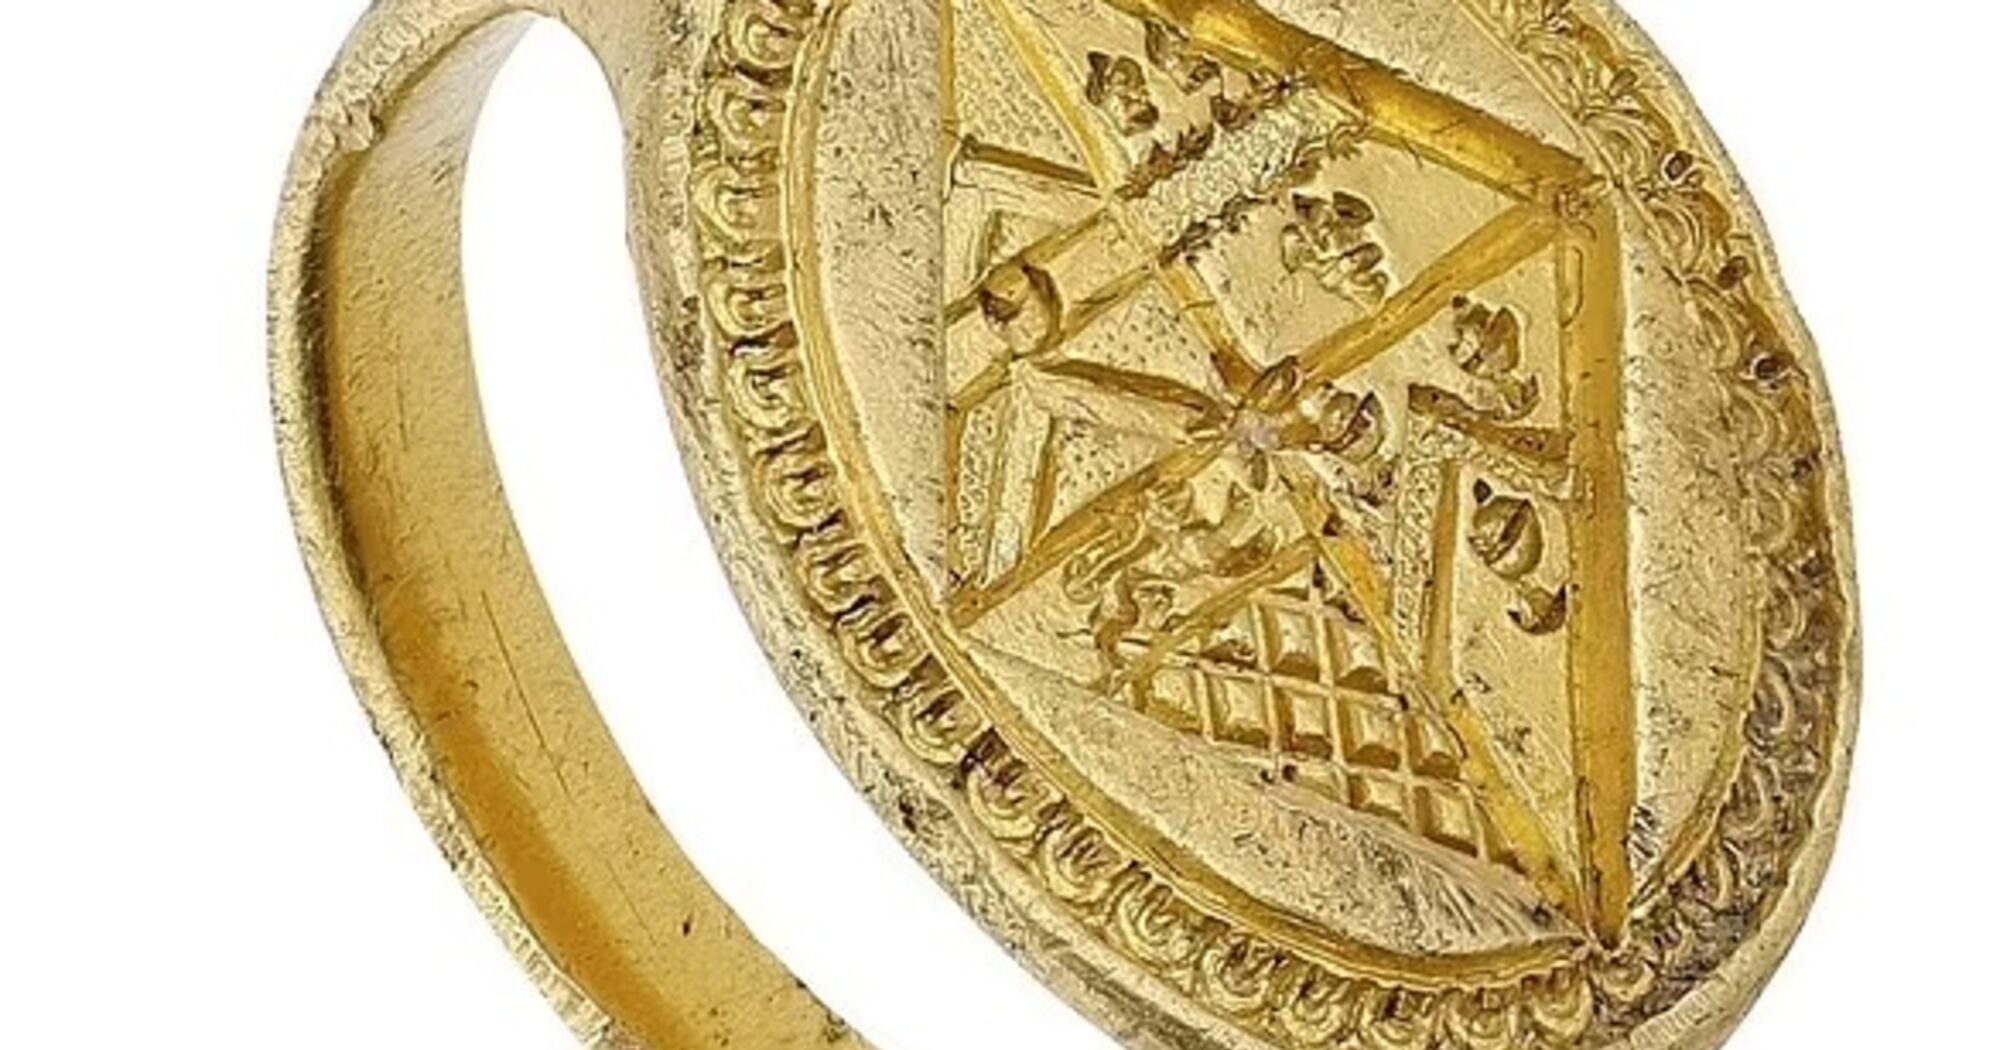 Extraordinary rare 17th century ring found in England (photo)